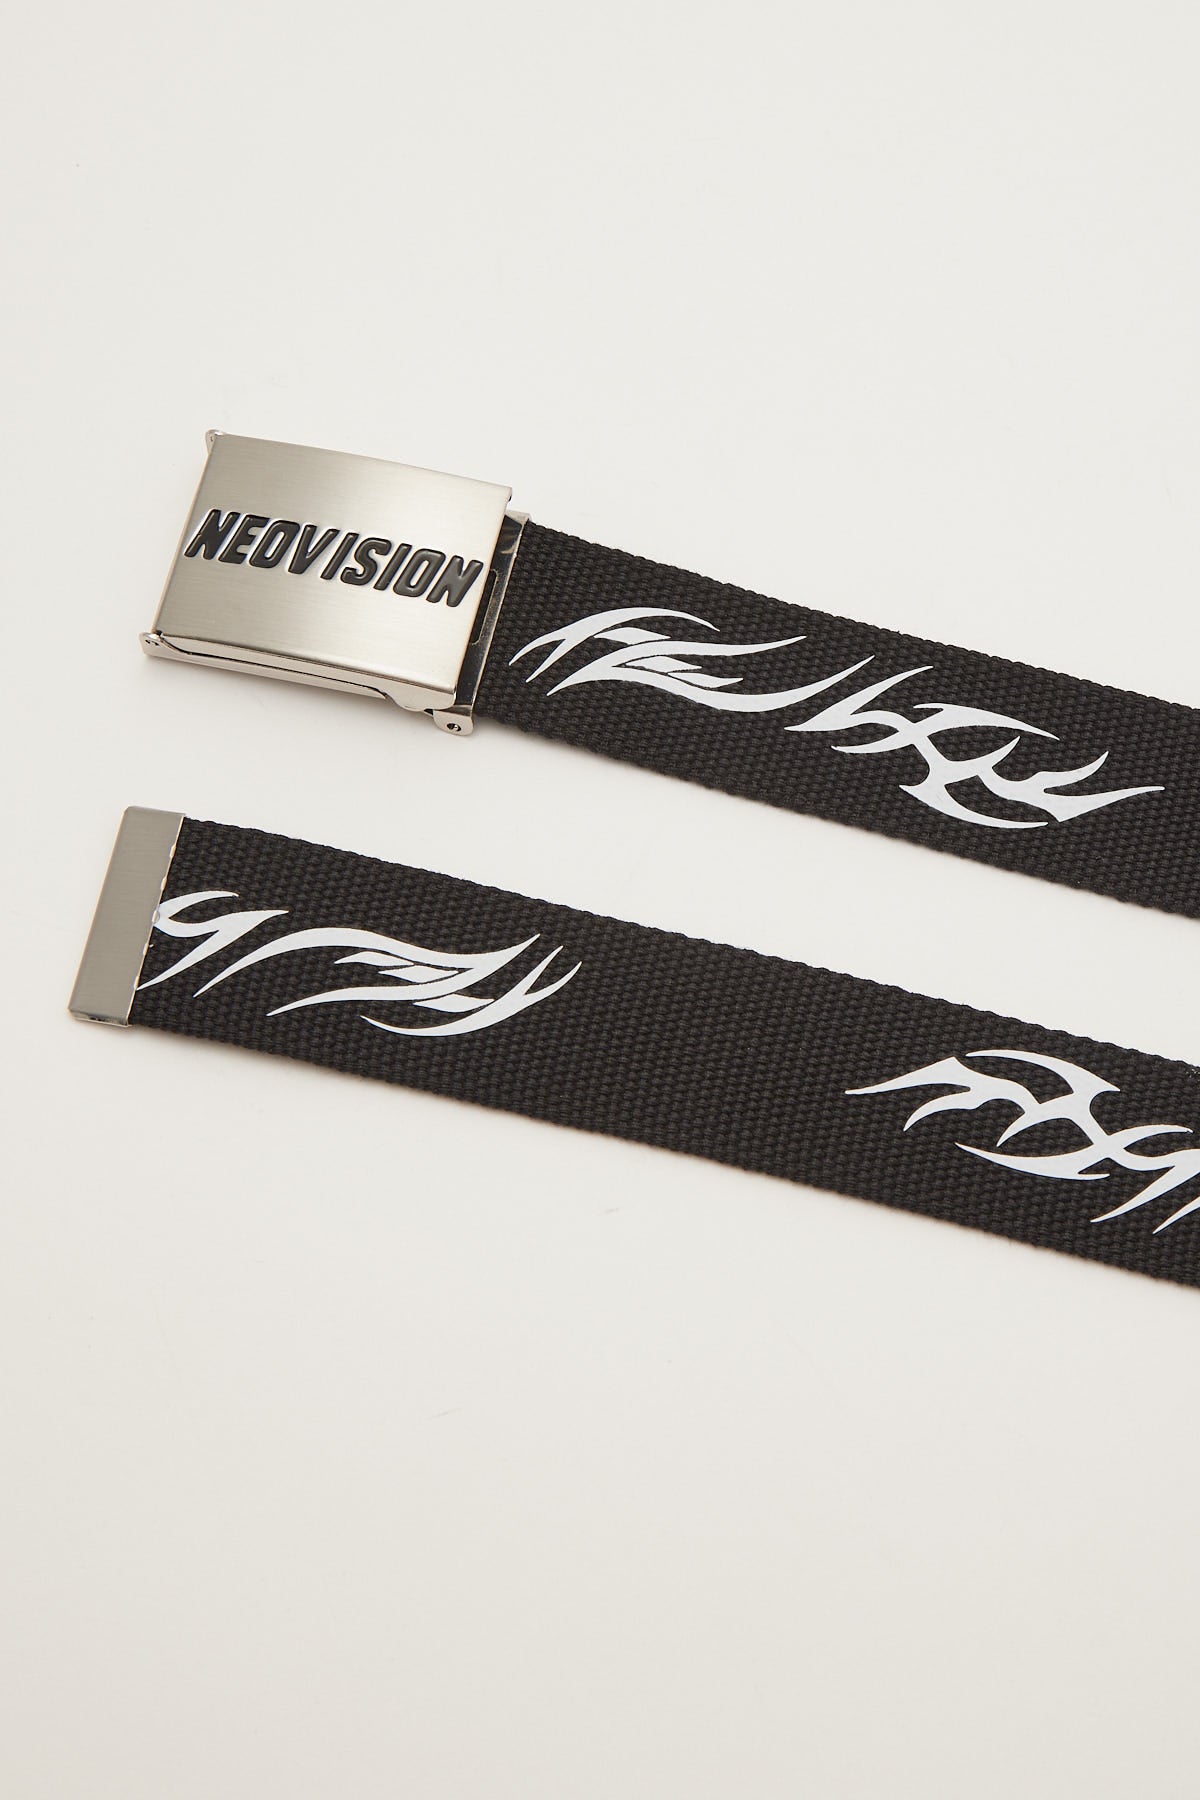 Neovision Tribal Web Belt Black